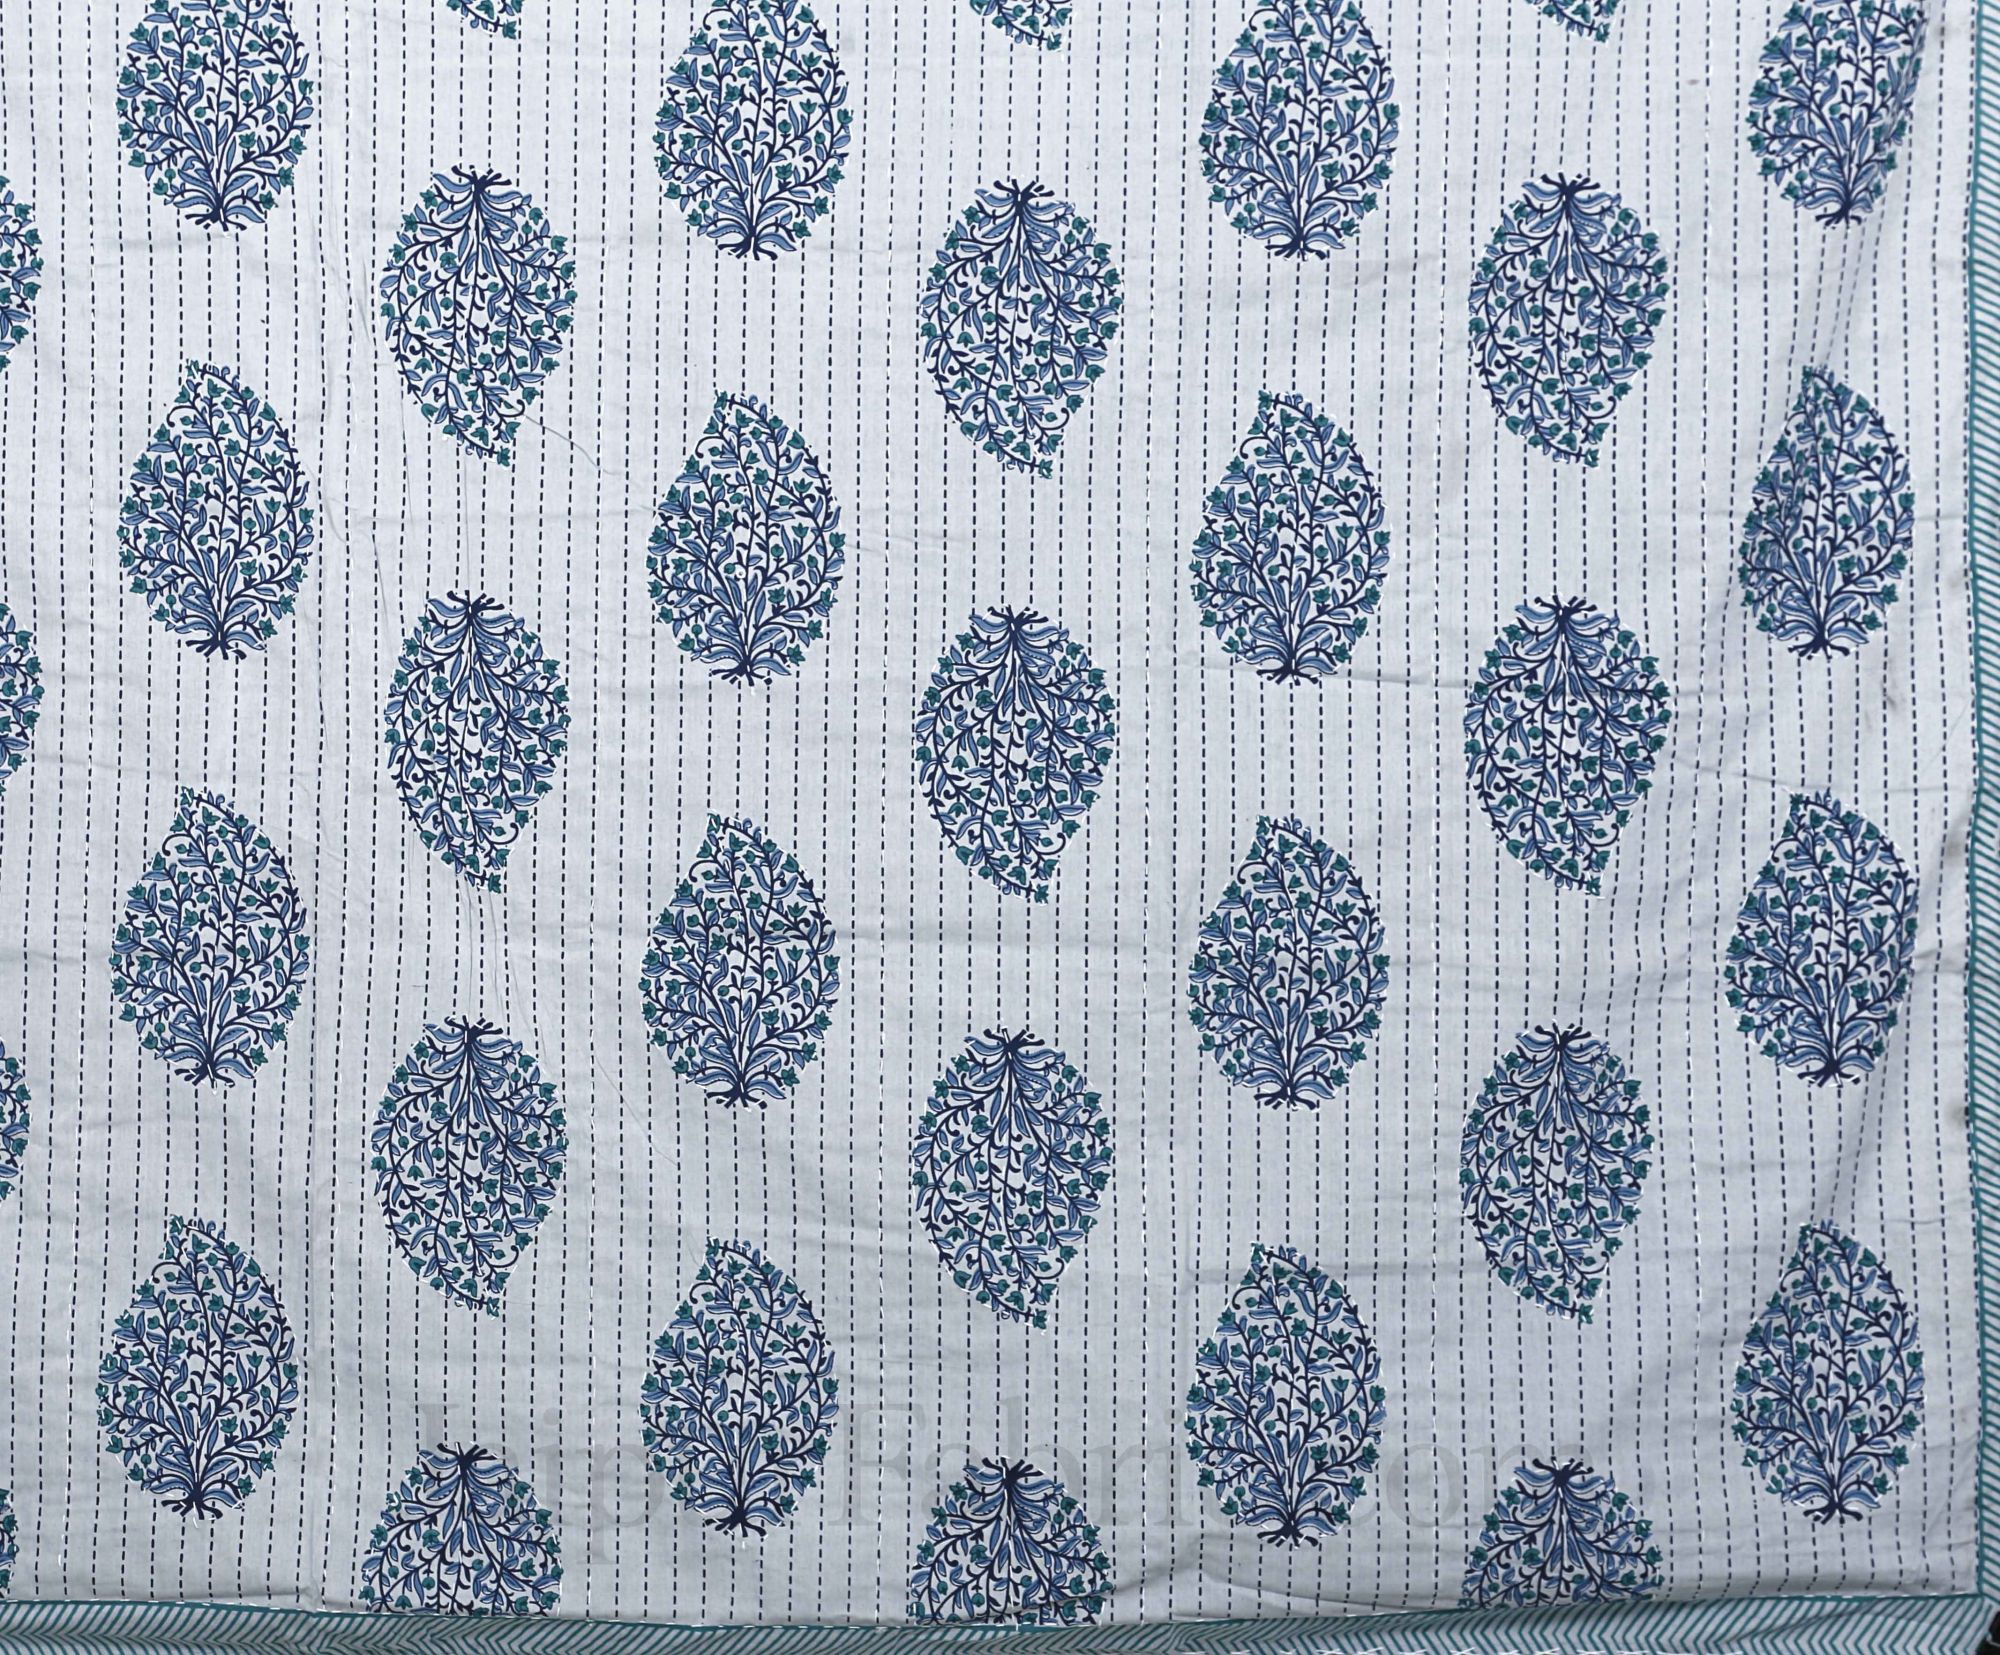 Beautiful Blue Kantha Thread Work Embroidery Double Bedsheet / Dohar / Light Blanket / Thin Comforter